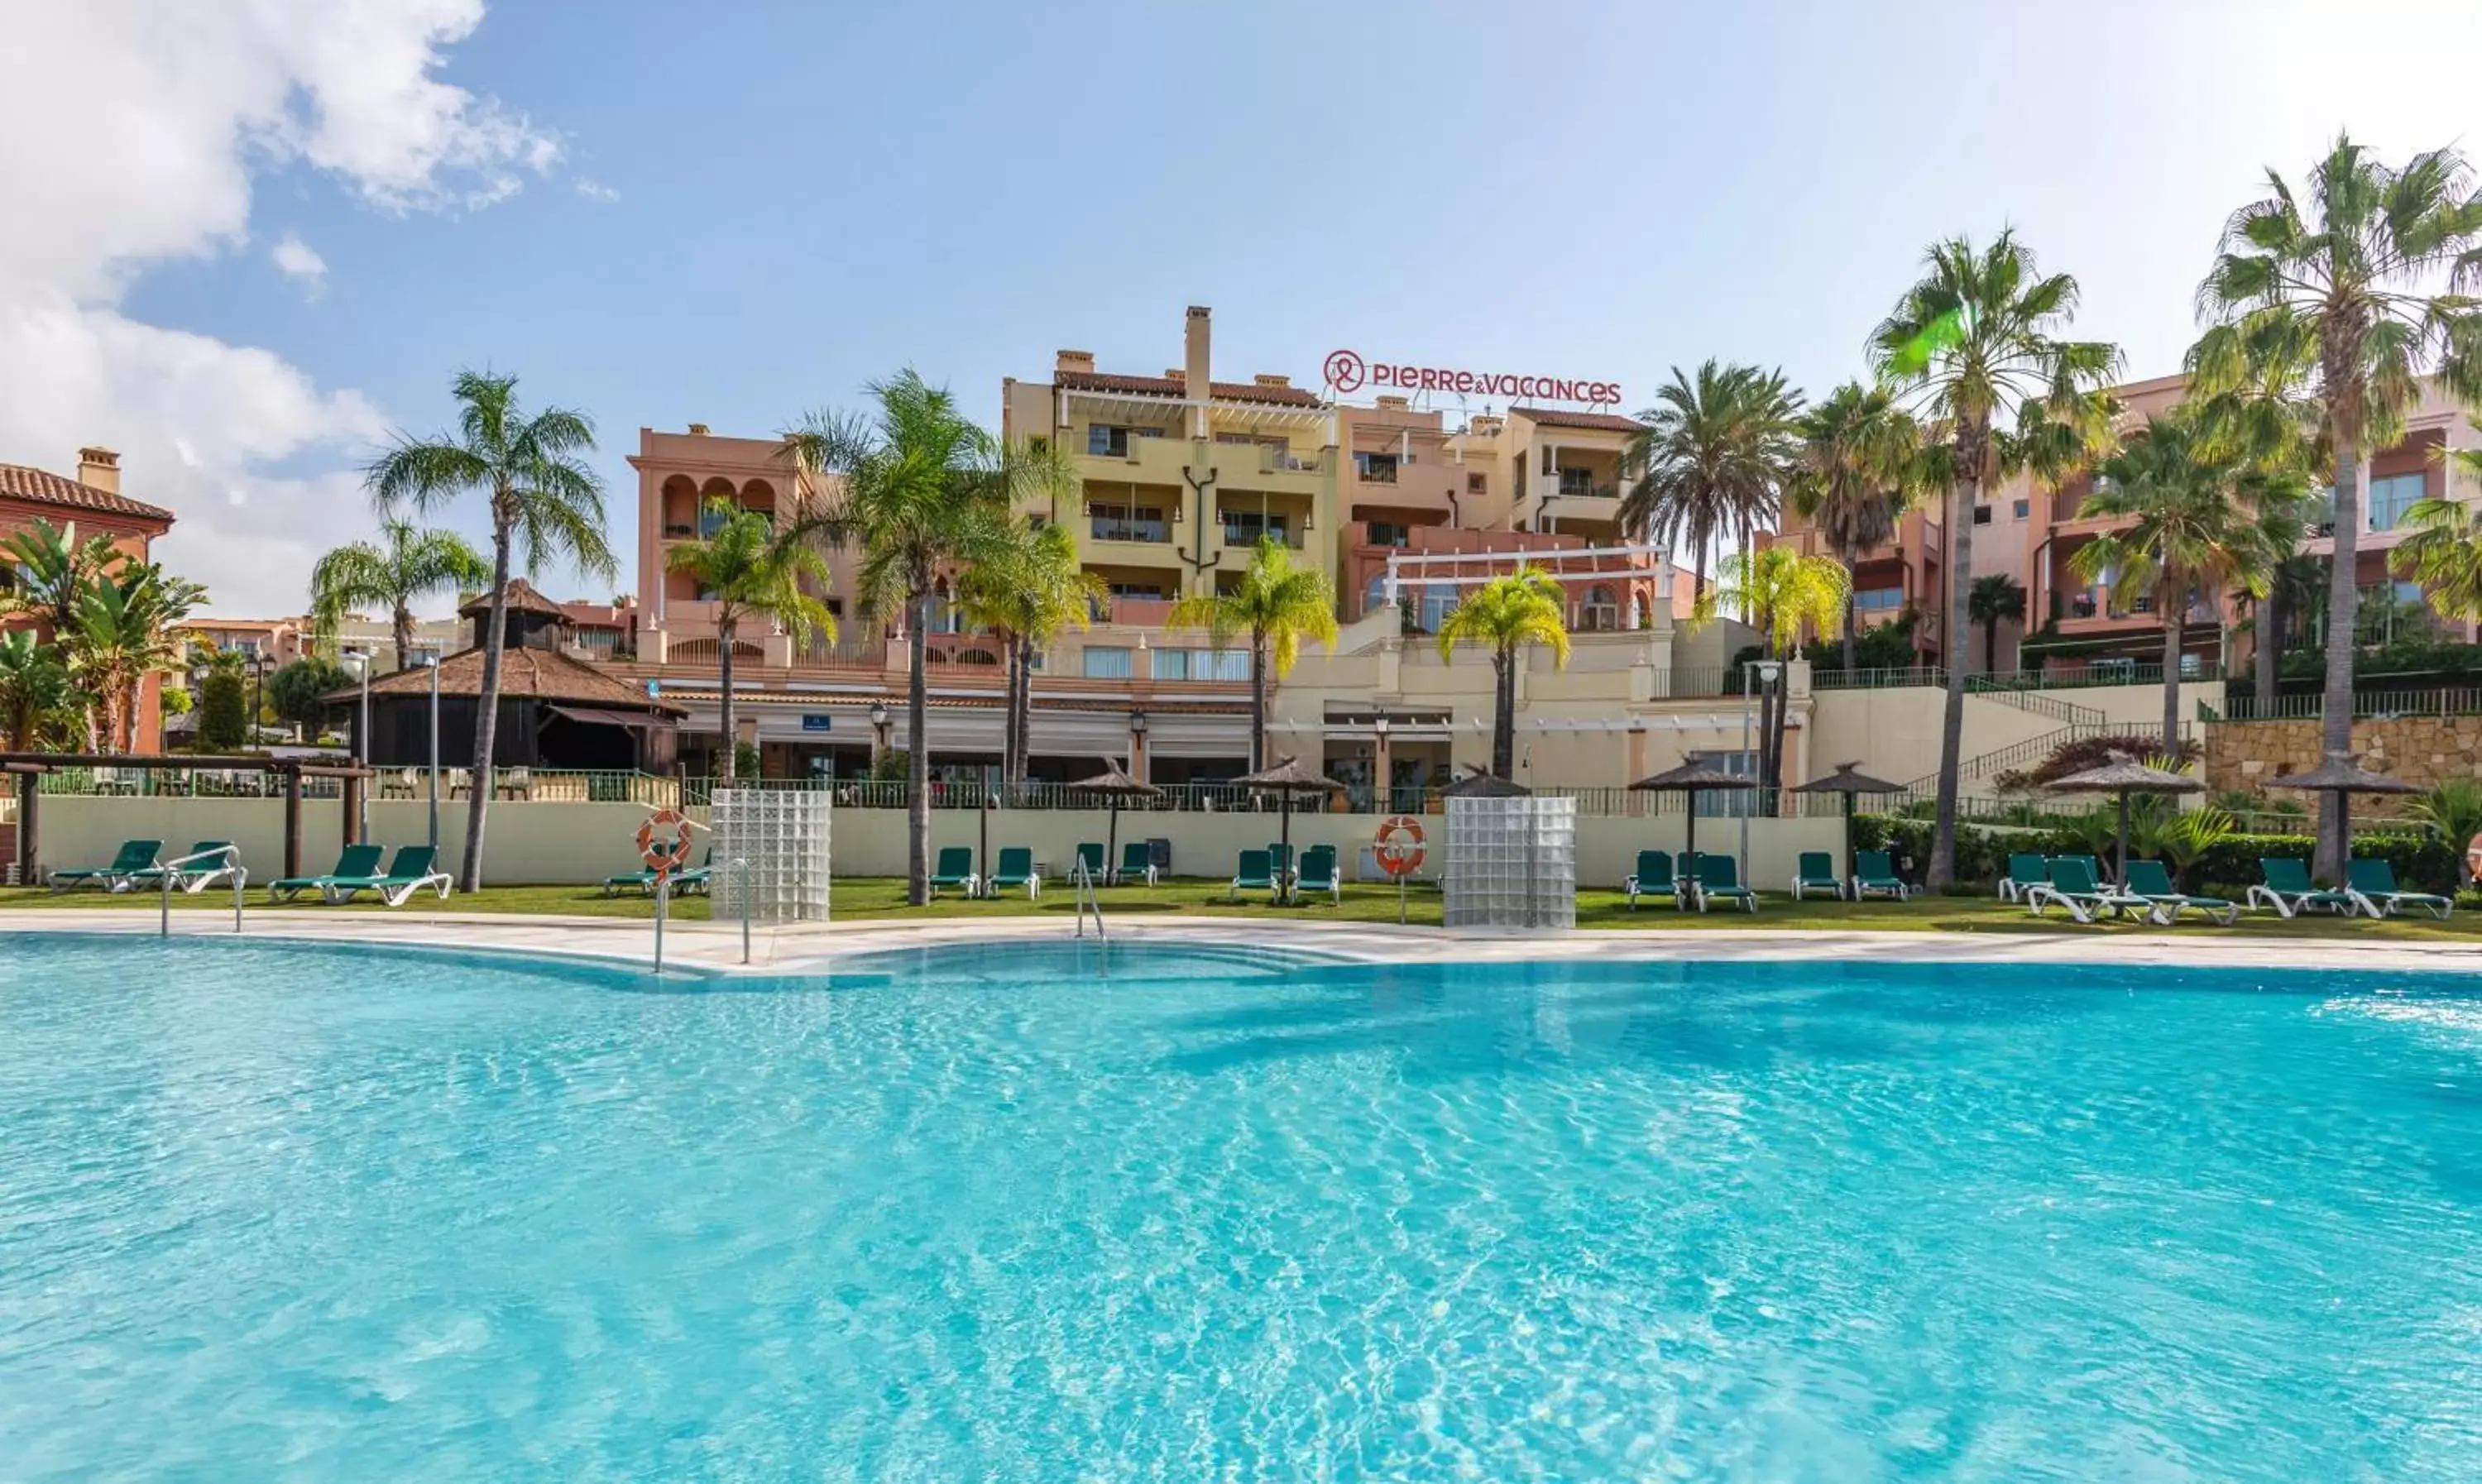 Swimming Pool in Pierre & Vacances Resort Terrazas Costa del Sol